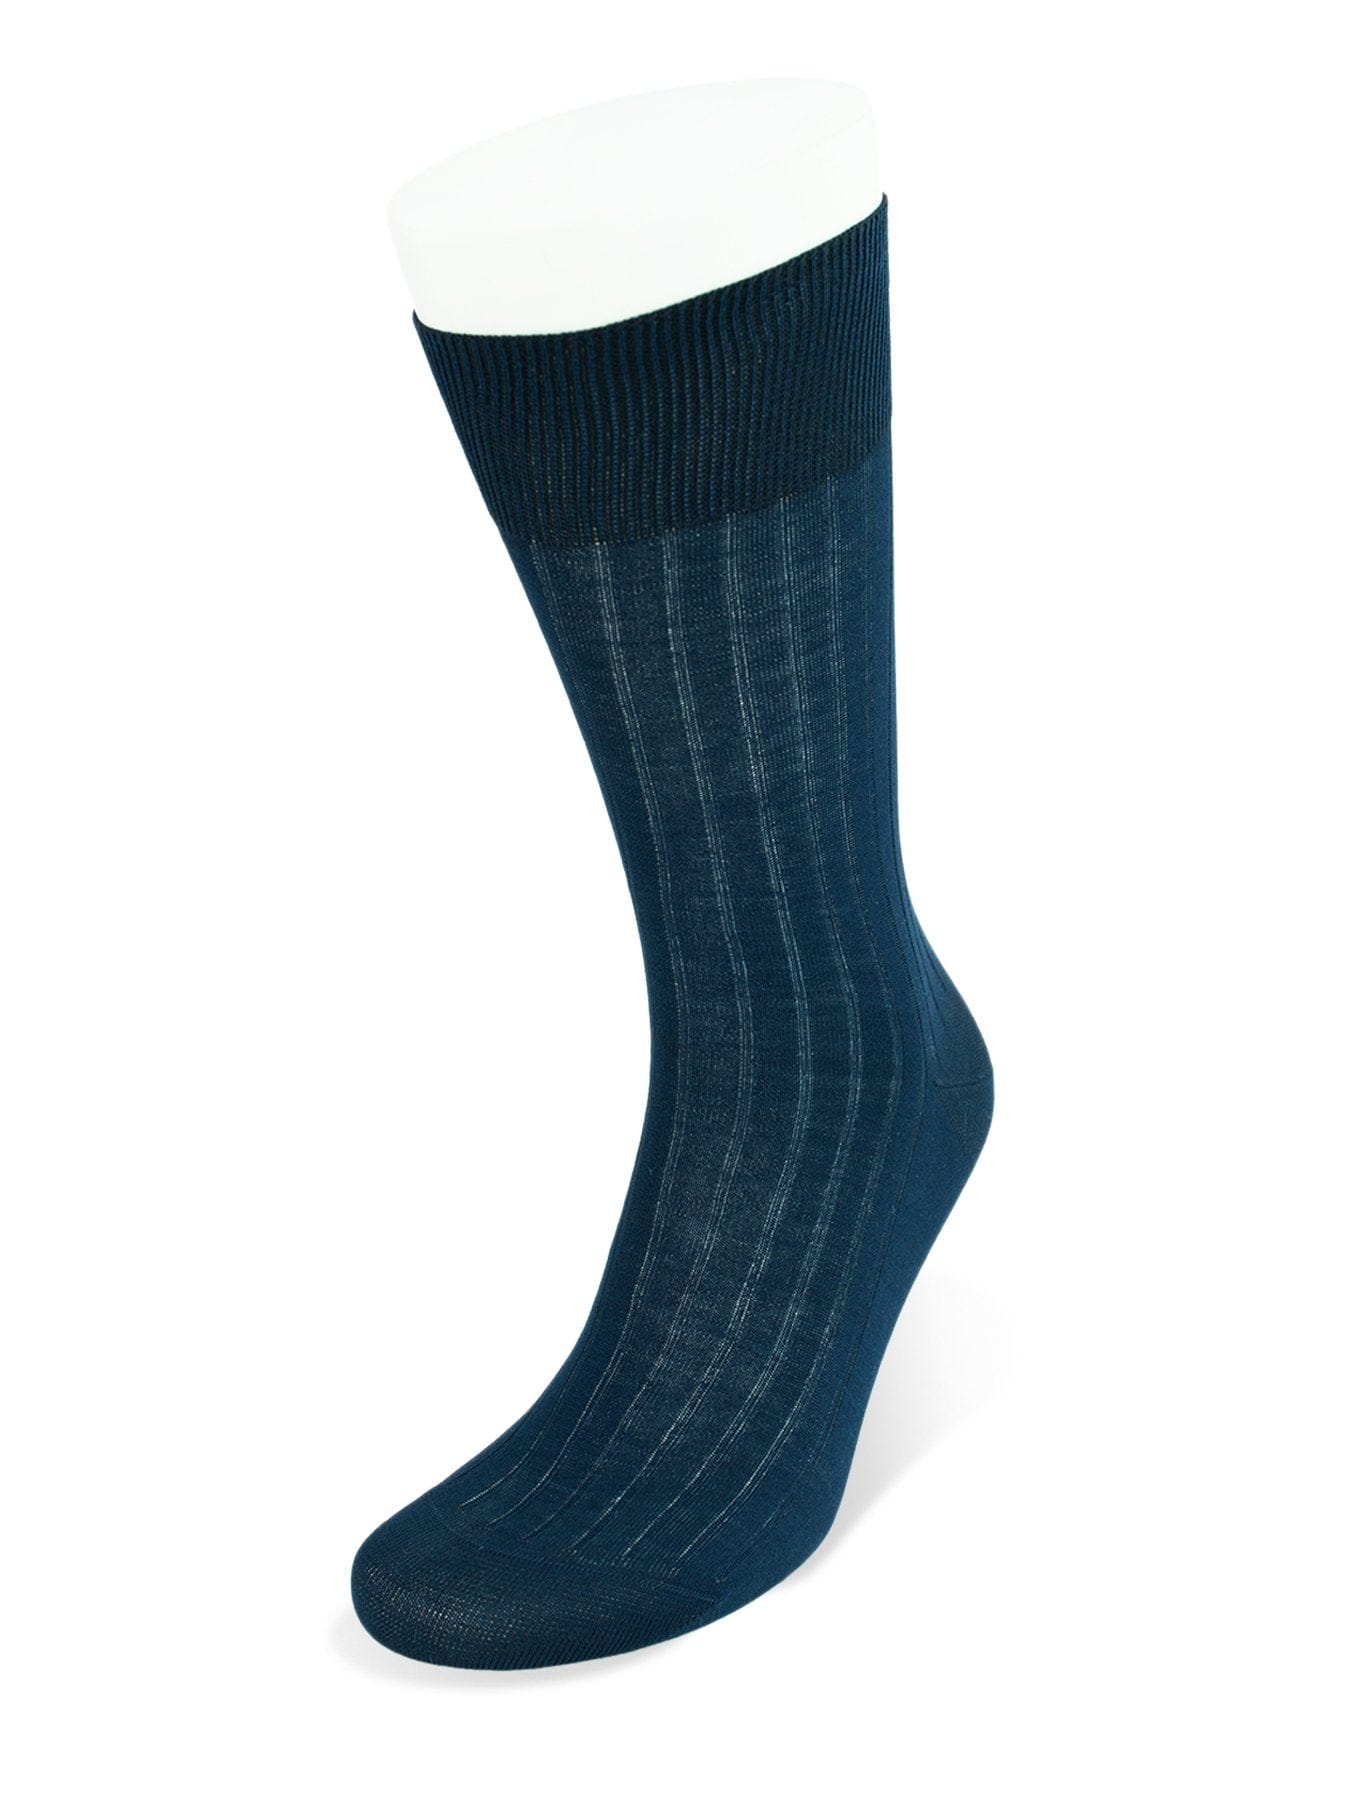 Short Plain Navy Cotton Socks